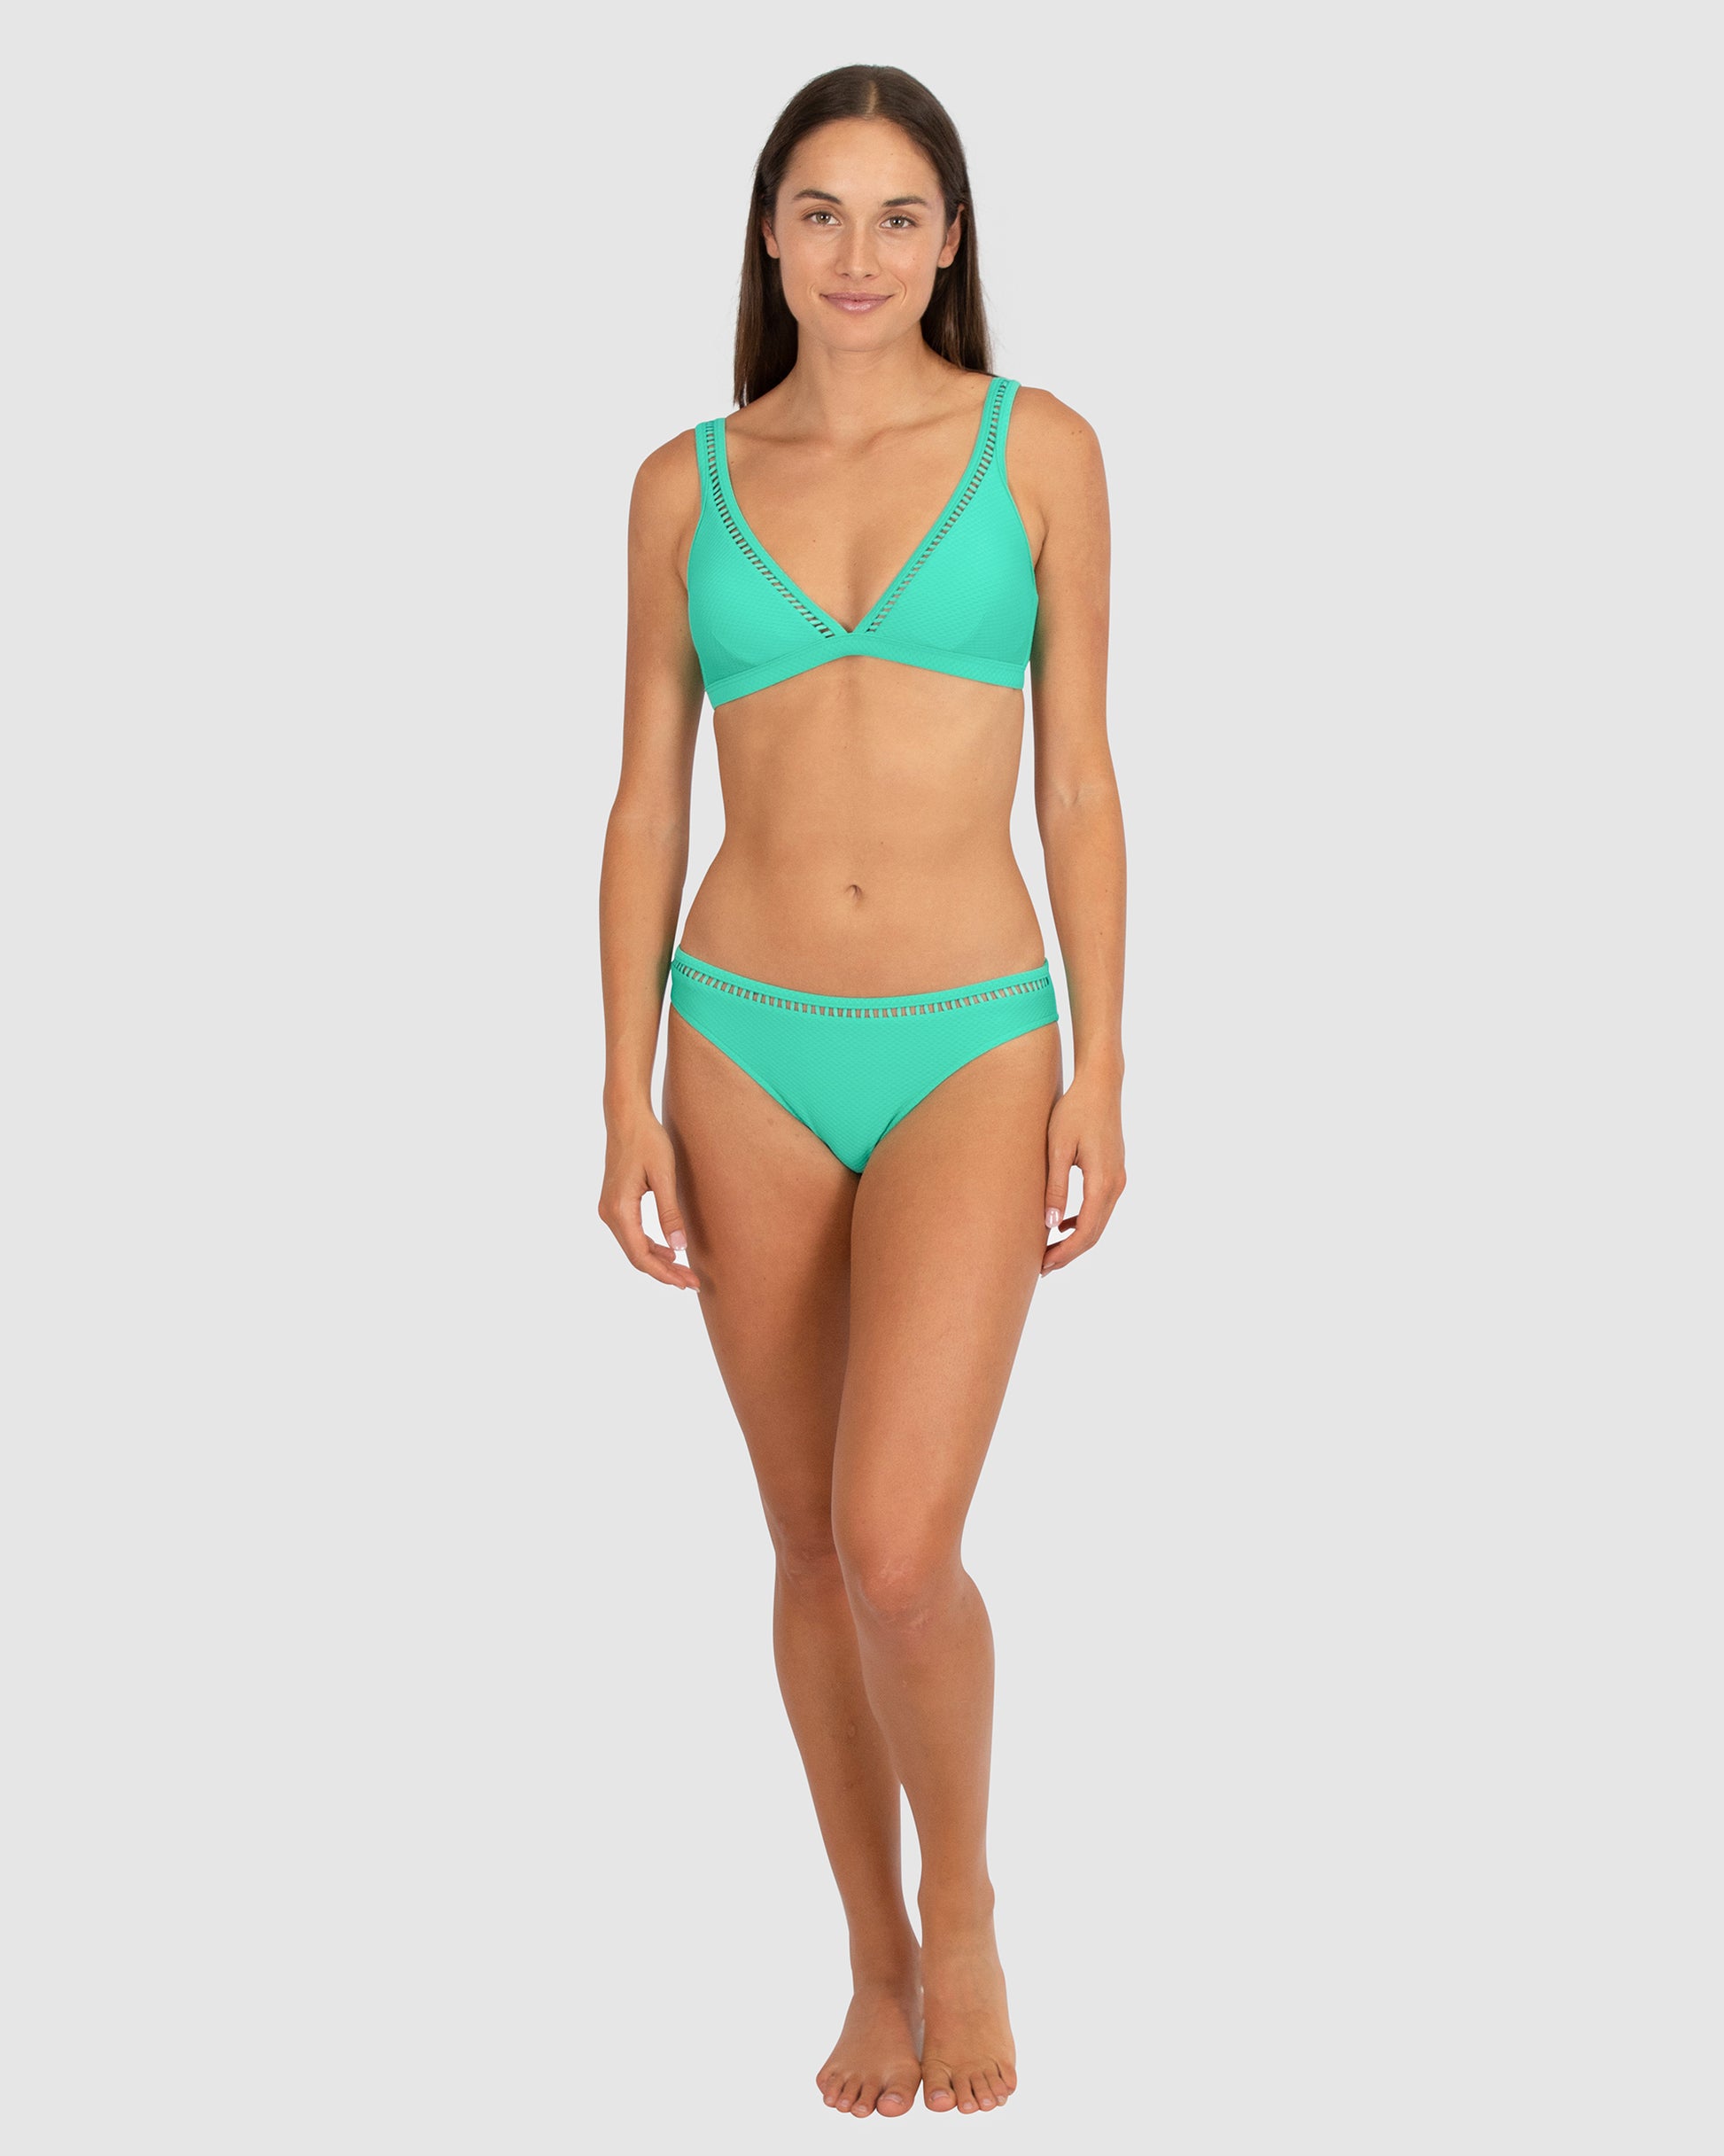 Baku Rococco Booster Bra Bikini Top - Available Today with Free